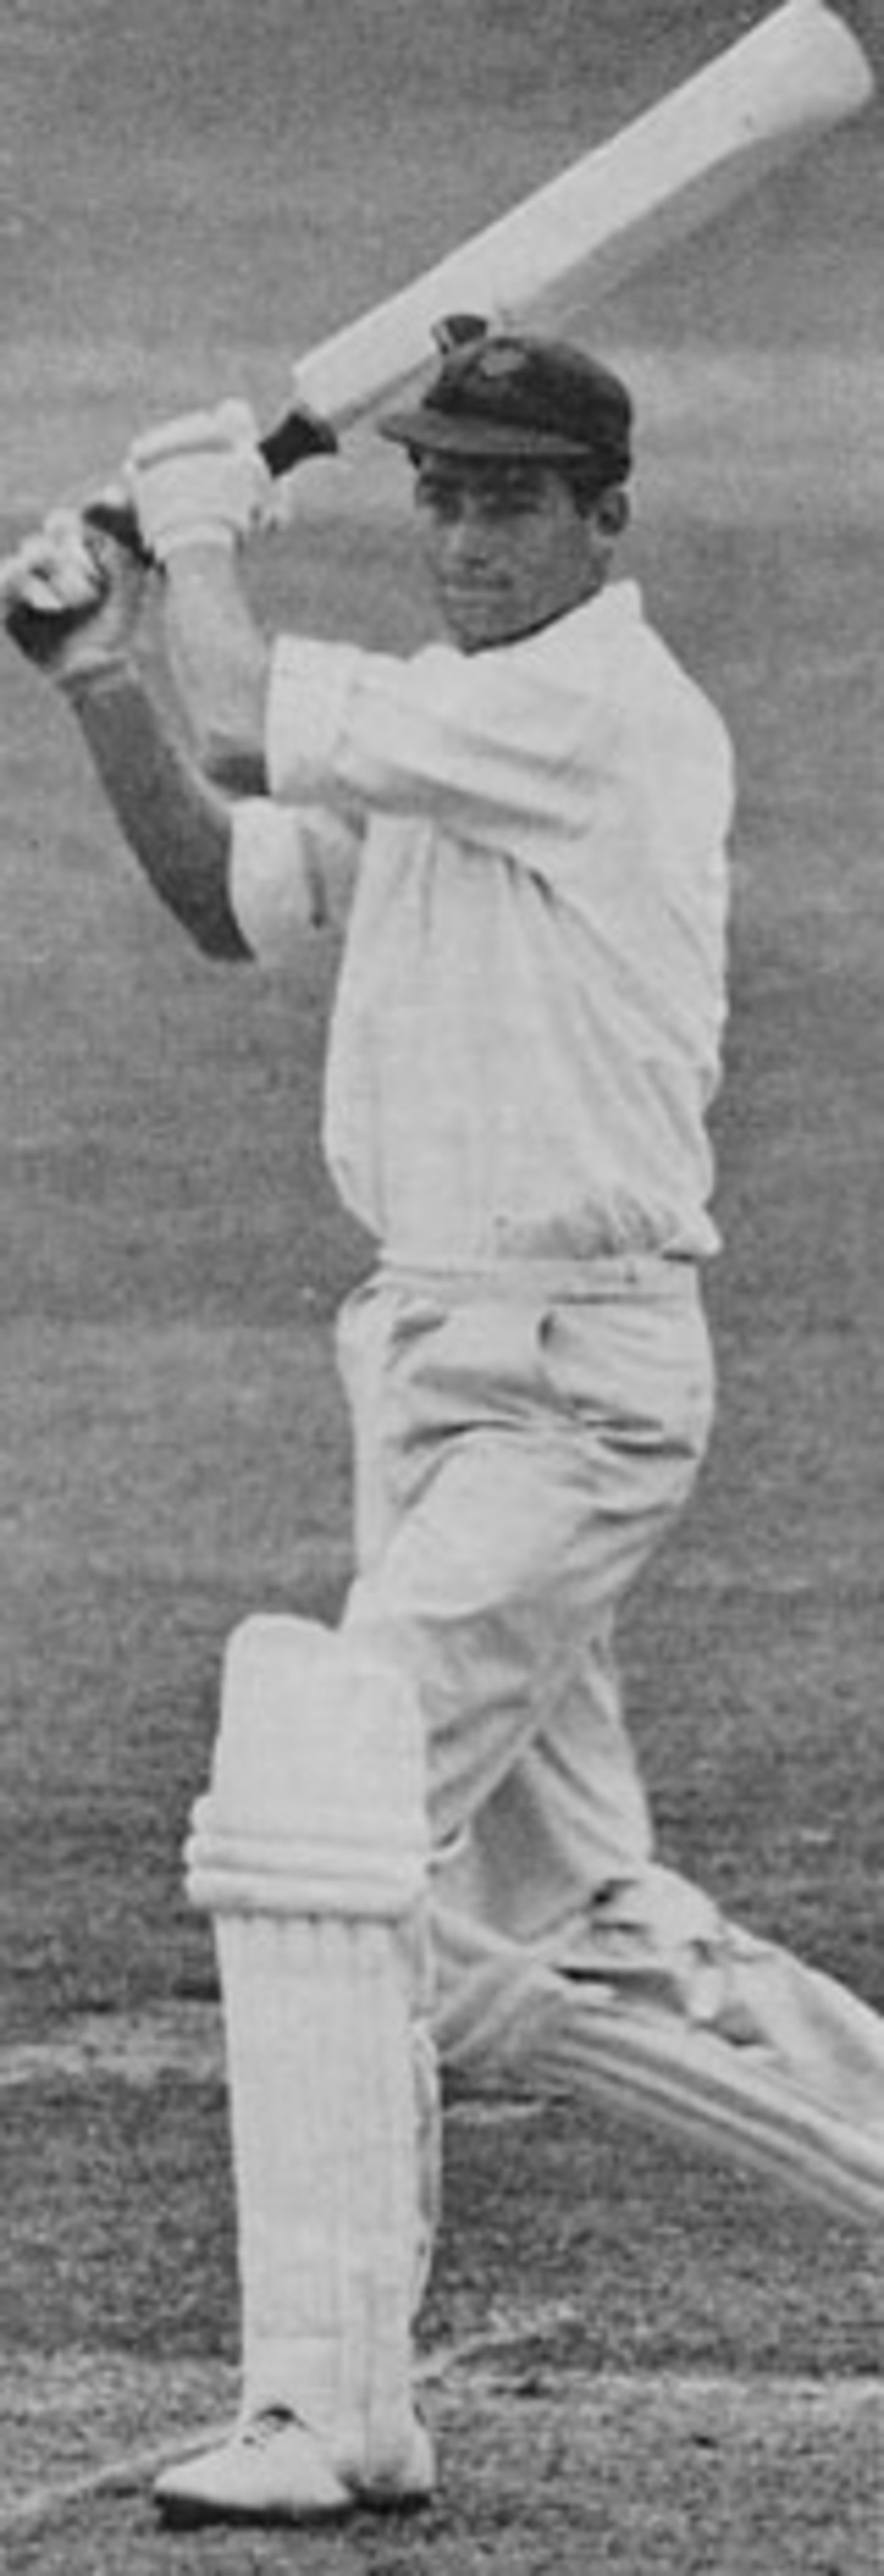 Richard Langridge batting for Sussex against Yorkshire, Gillette Cup 2nd round, 1963